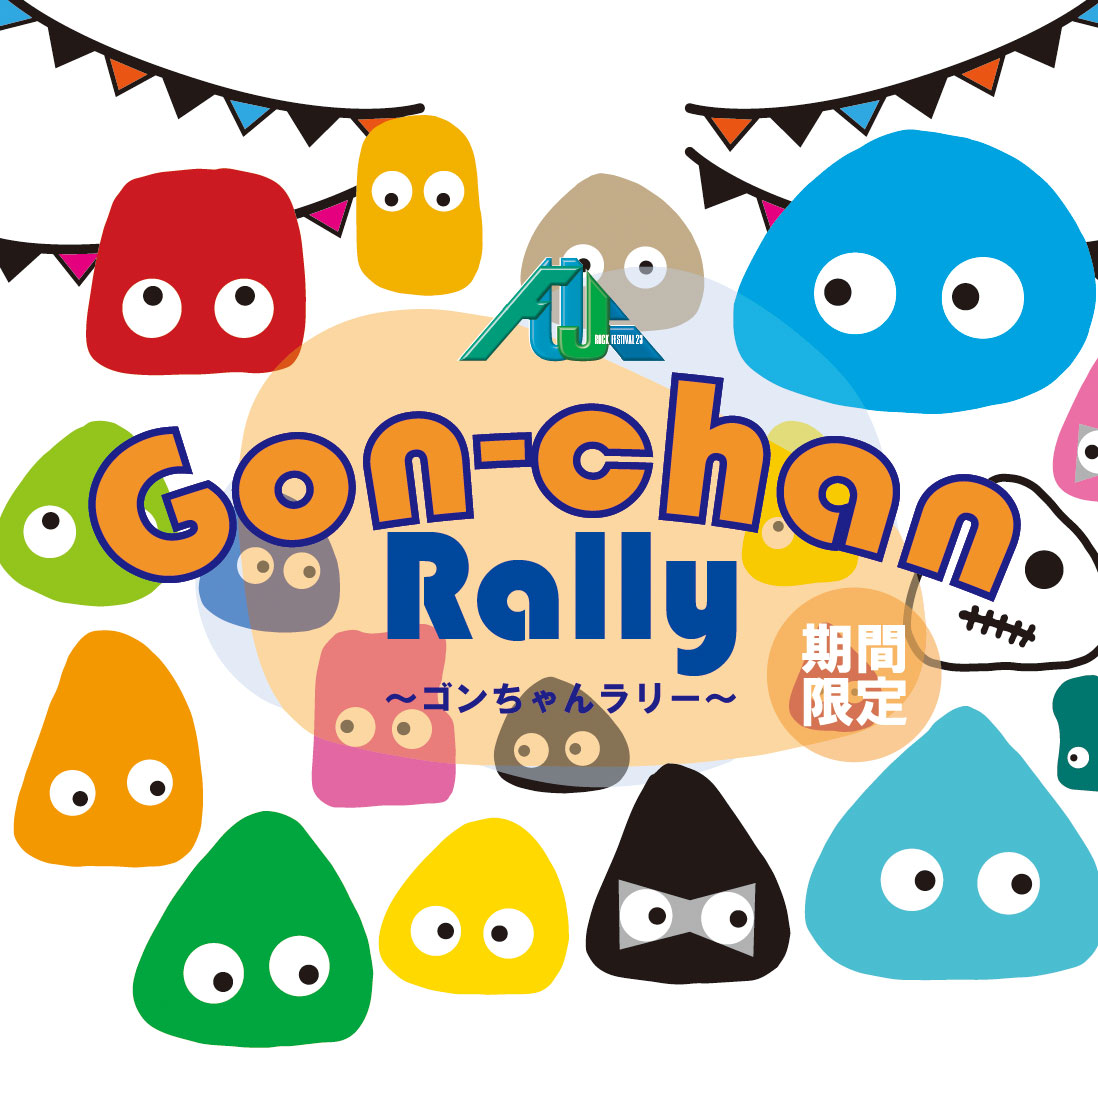 _Gon-chan-Rally-WEBjpg